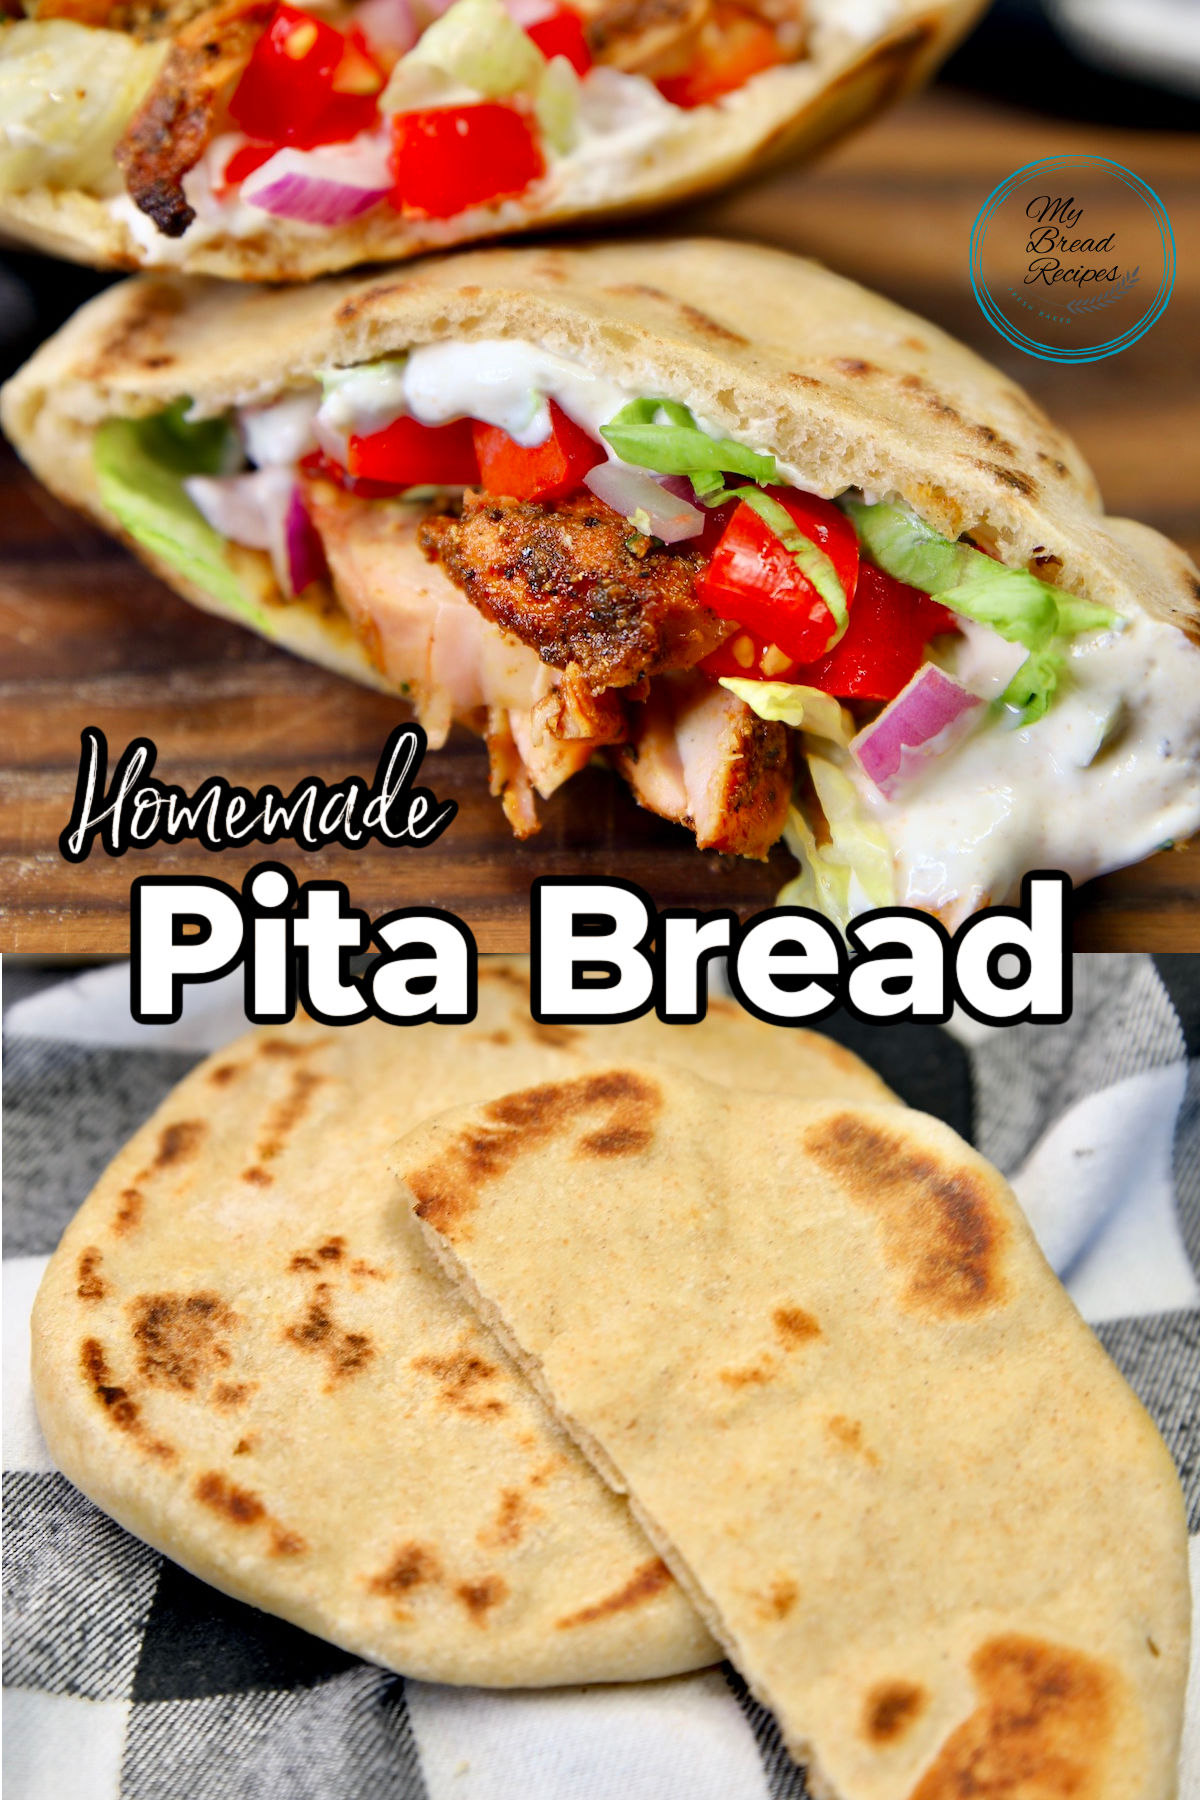 Pita bread sandwich/ stack of pita bread.Text overlay.